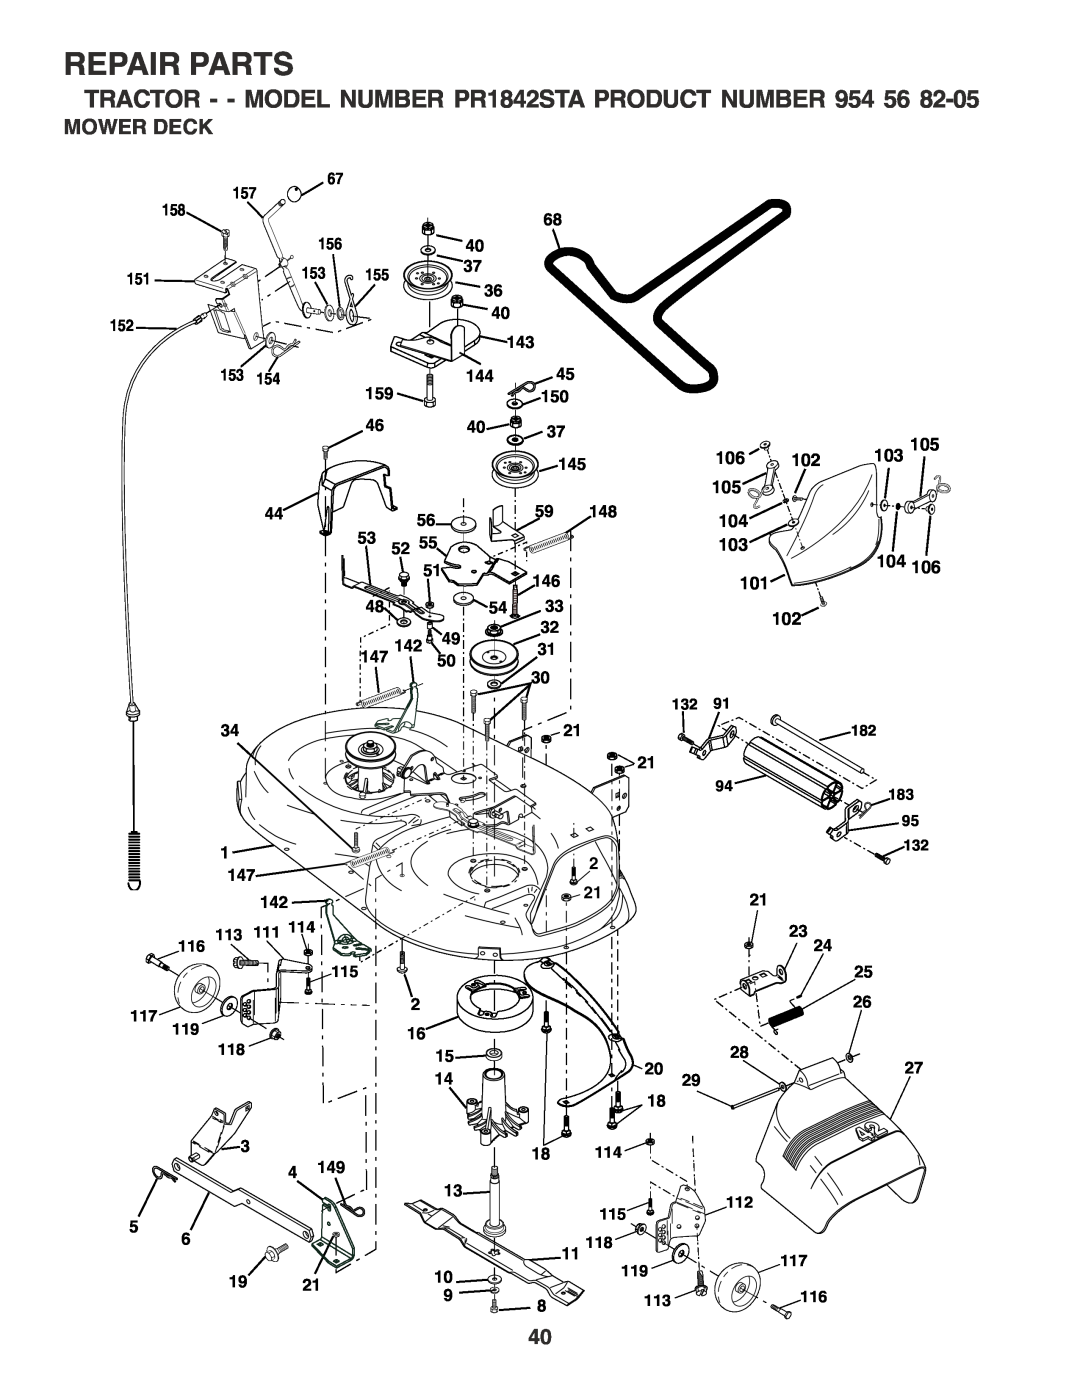 Poulan owner manual Mower Deck, Repair Parts, TRACTOR - - MODEL NUMBER PR1842STA PRODUCT NUMBER 954, 103 